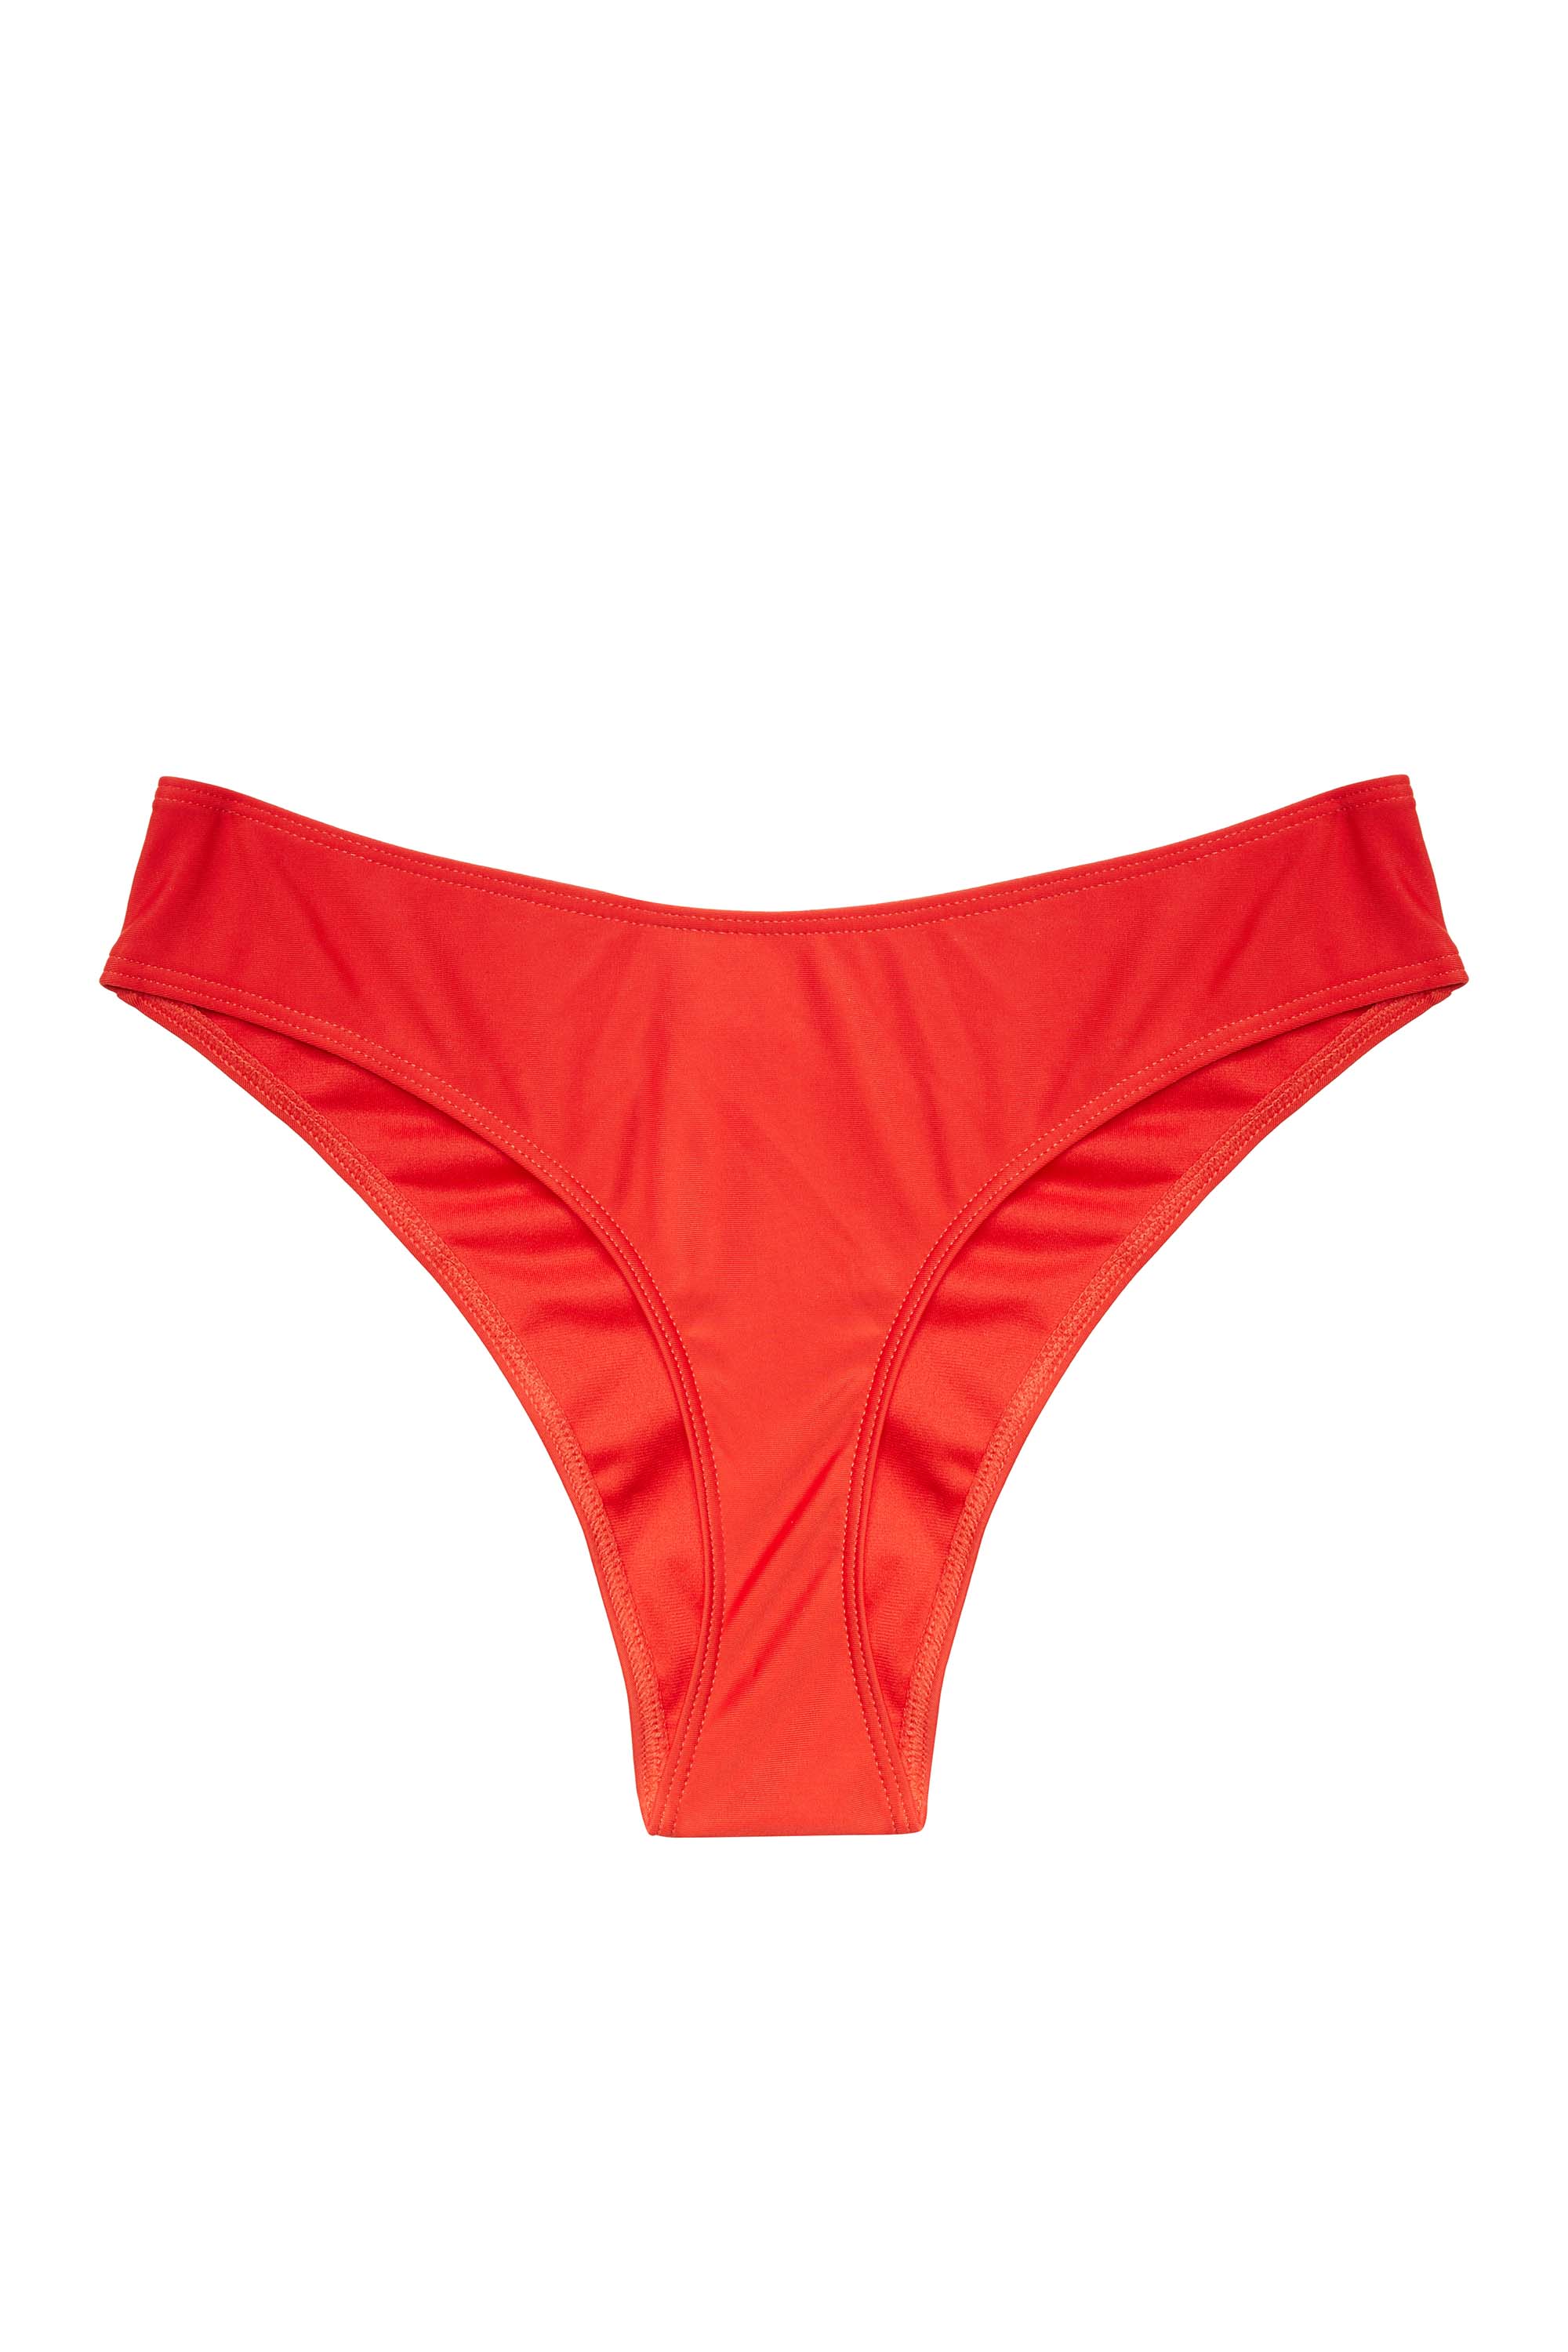 Red Shortie Bikini Brief